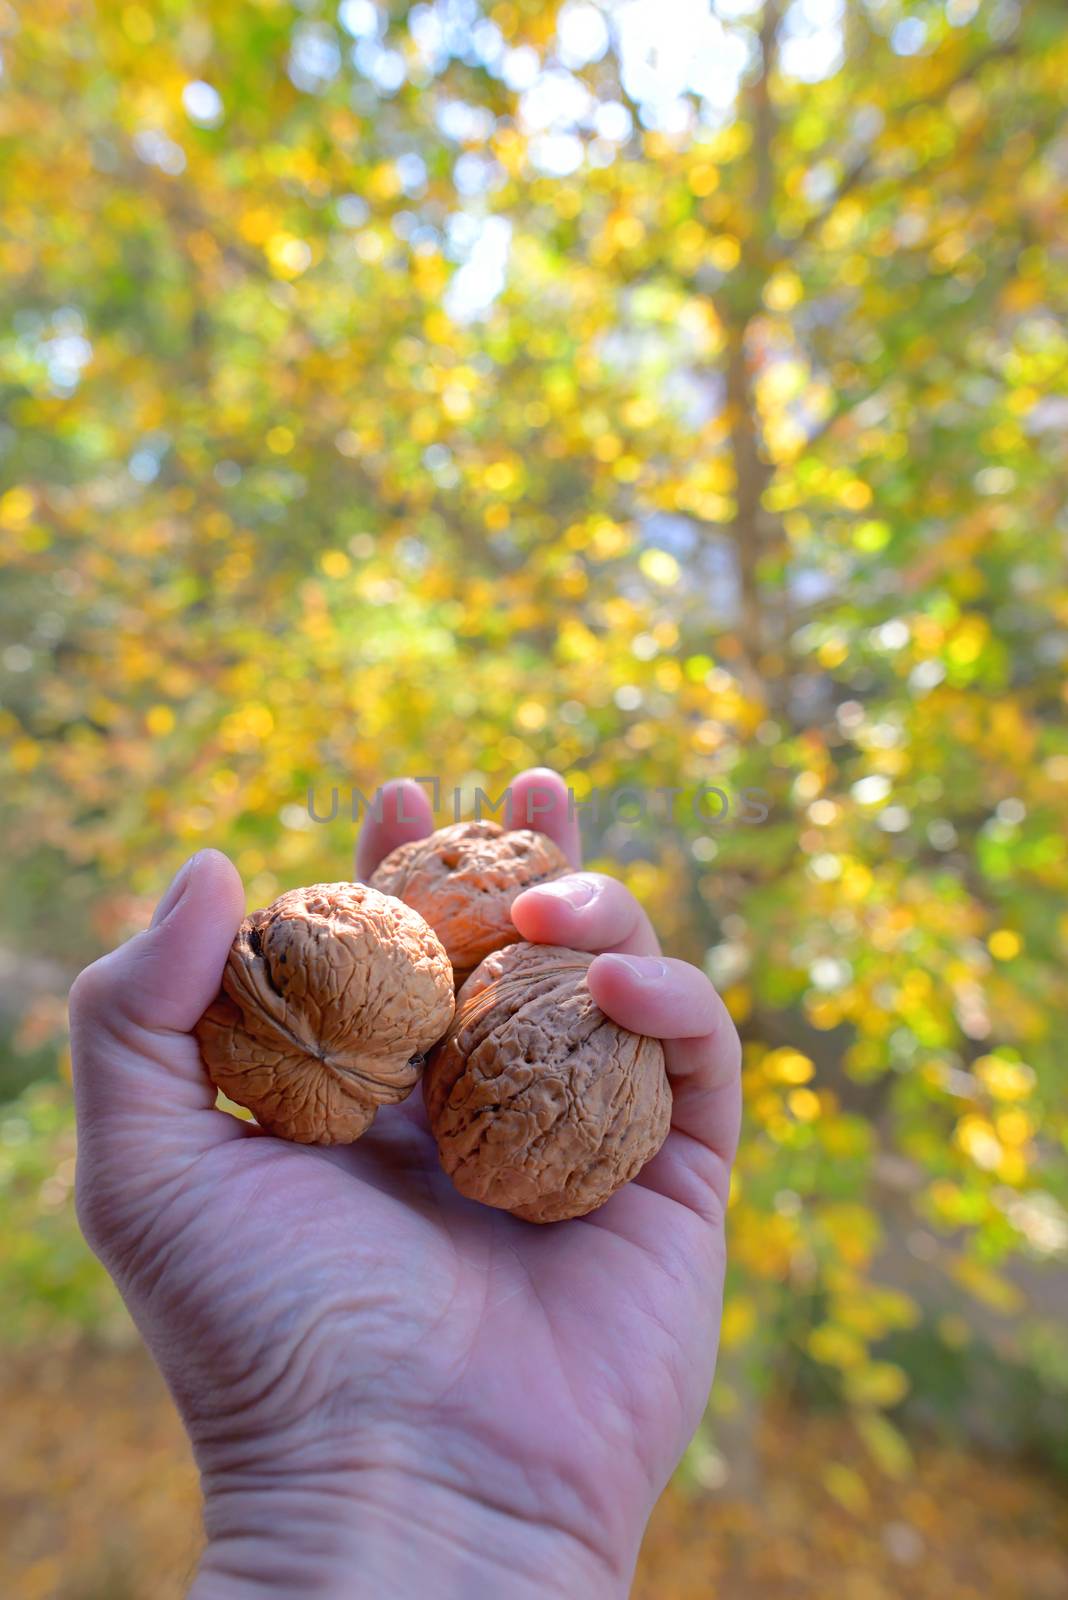 Autumn ripe walnuts in a hand